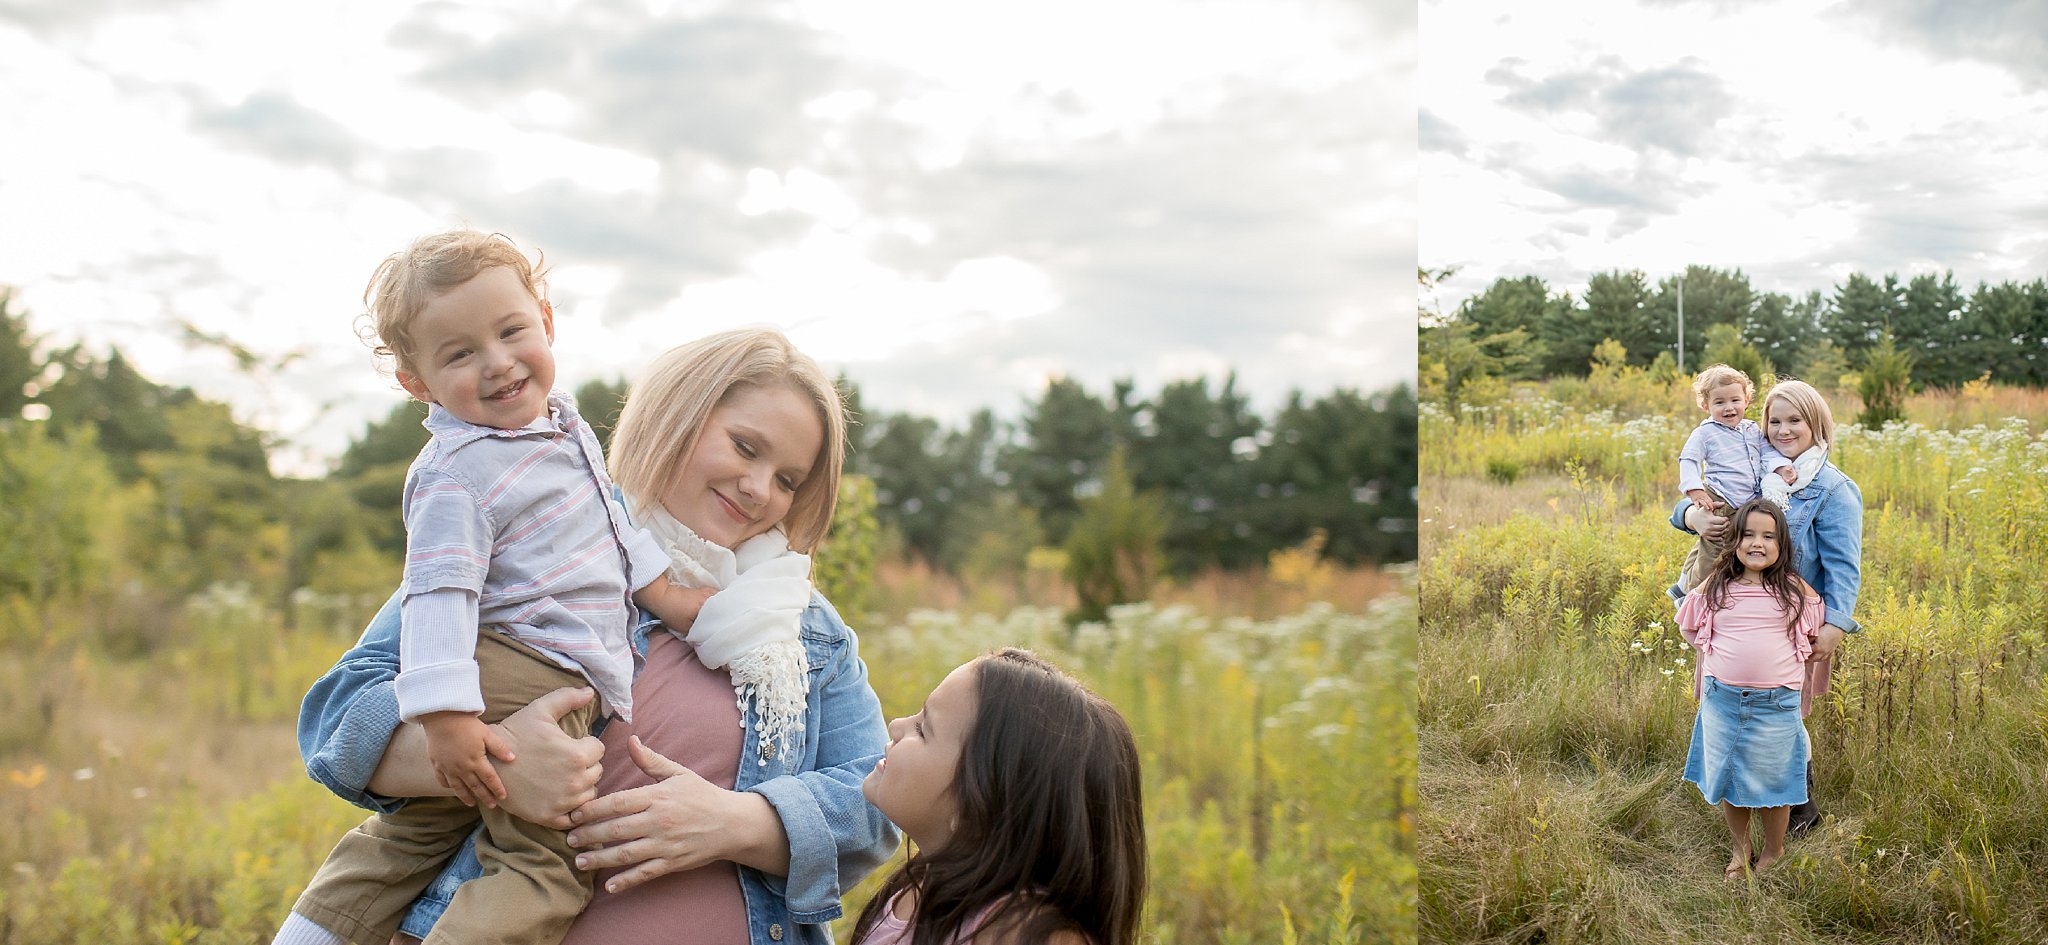 South Bend Family Photographer | Thrasher Family | St. Patrick's County Park | Toni Jay Photography